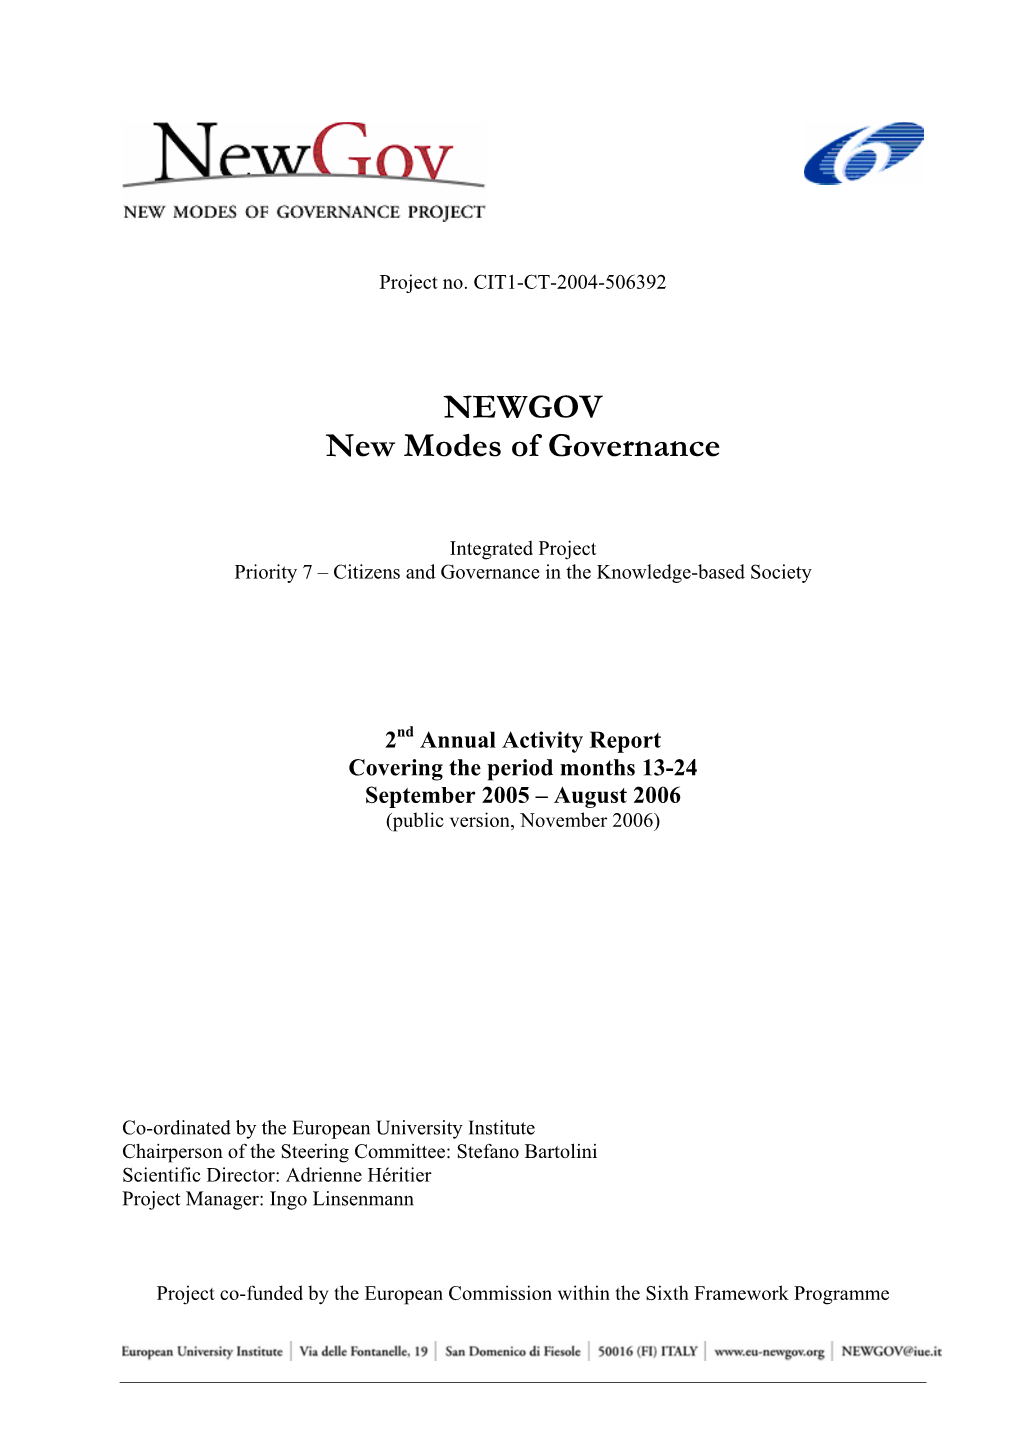 NEWGOV New Modes of Governance